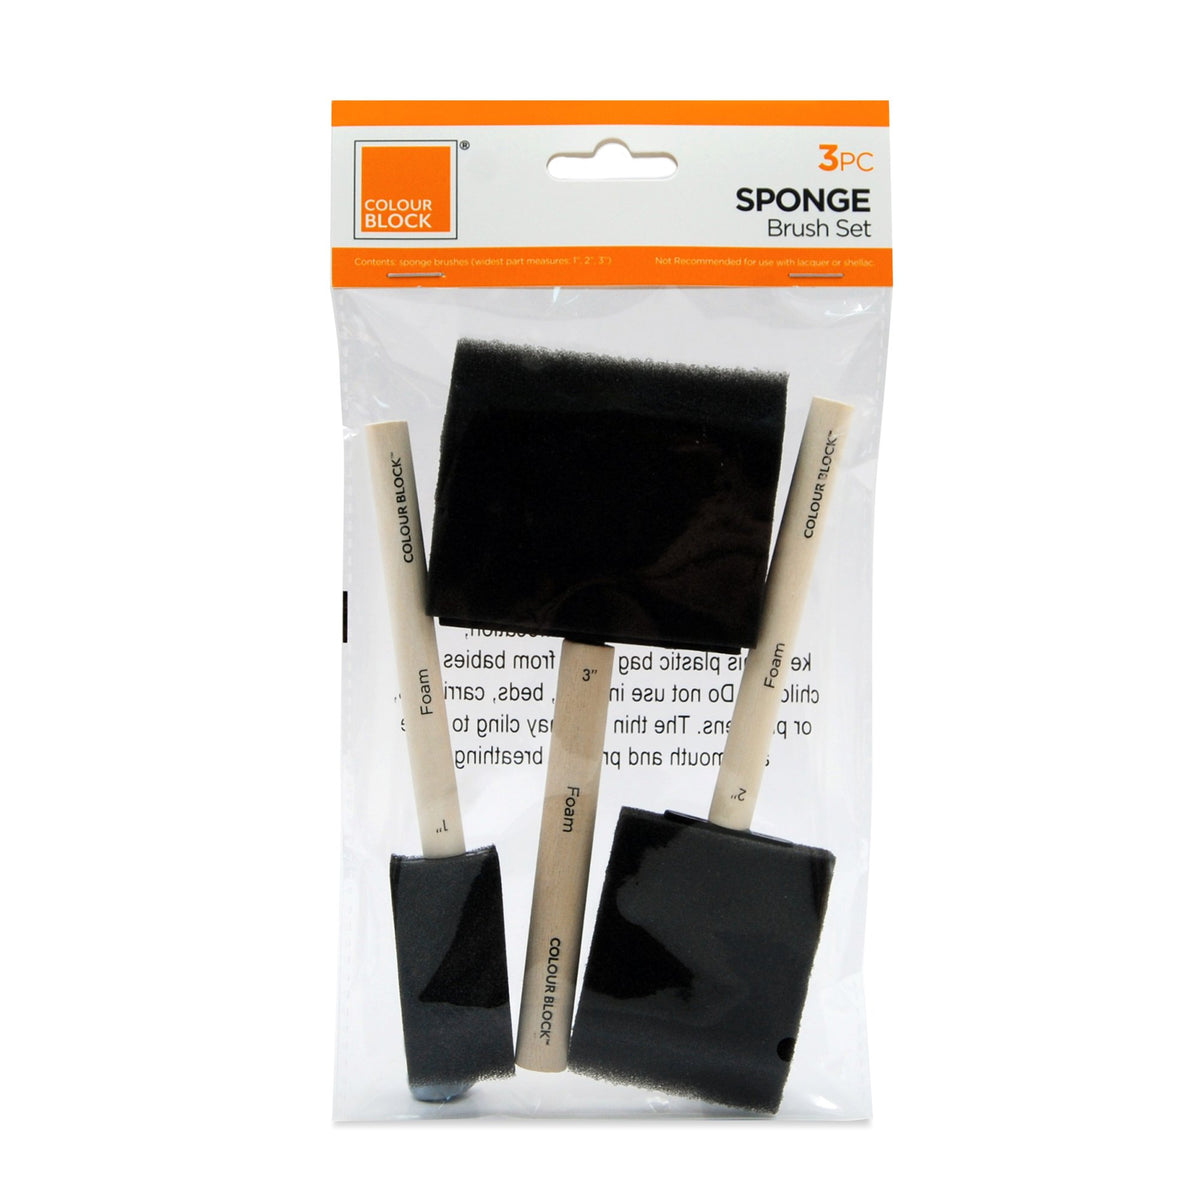  US Art Supply 1 Inch Foam Sponge Wood Handle Paint Brush Set